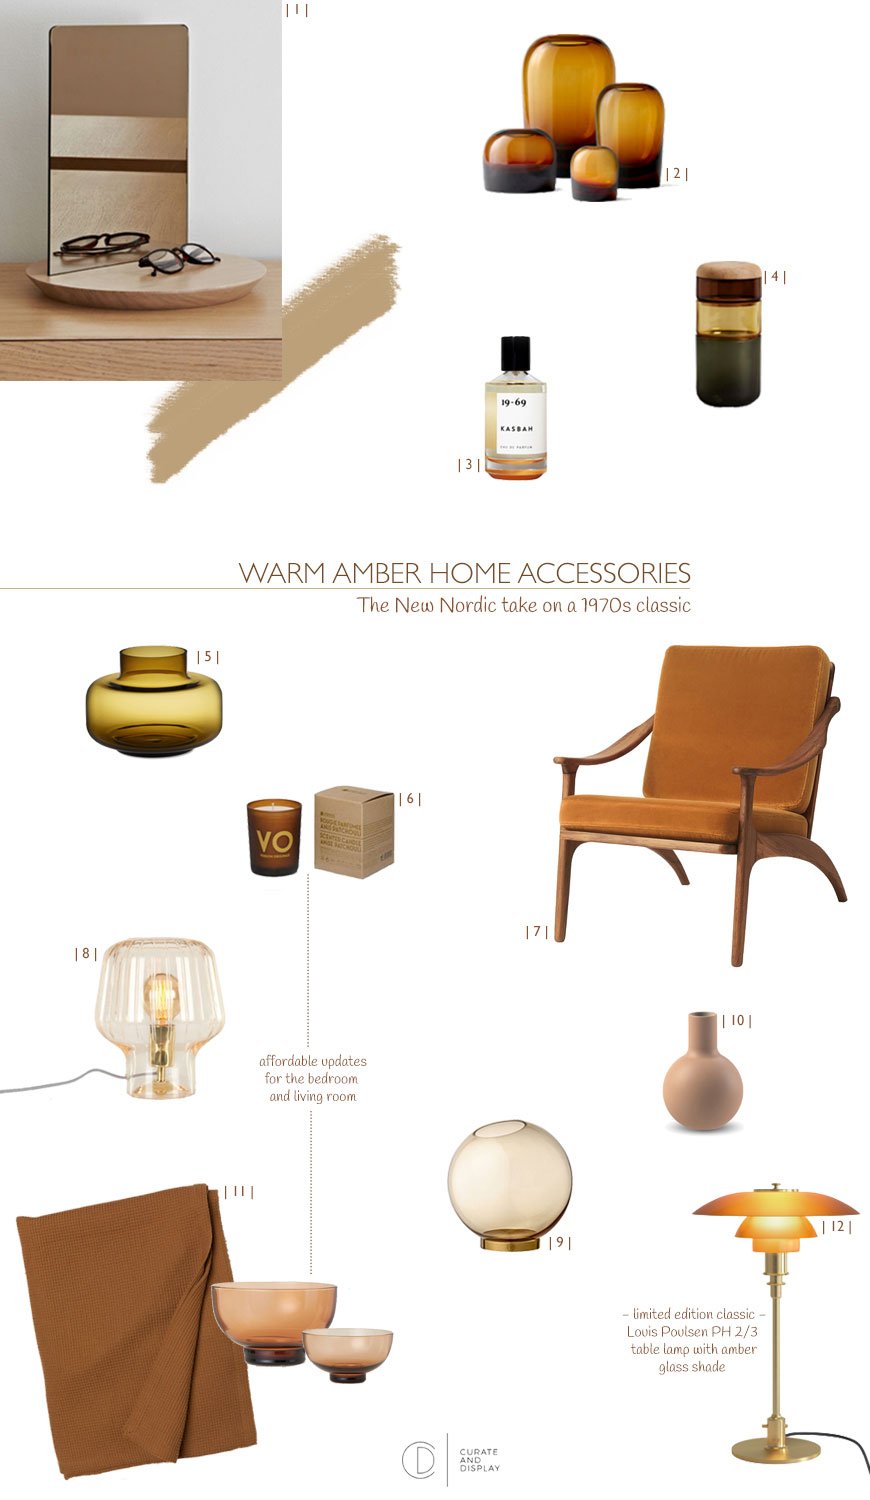 Warm amber home accessories round-up